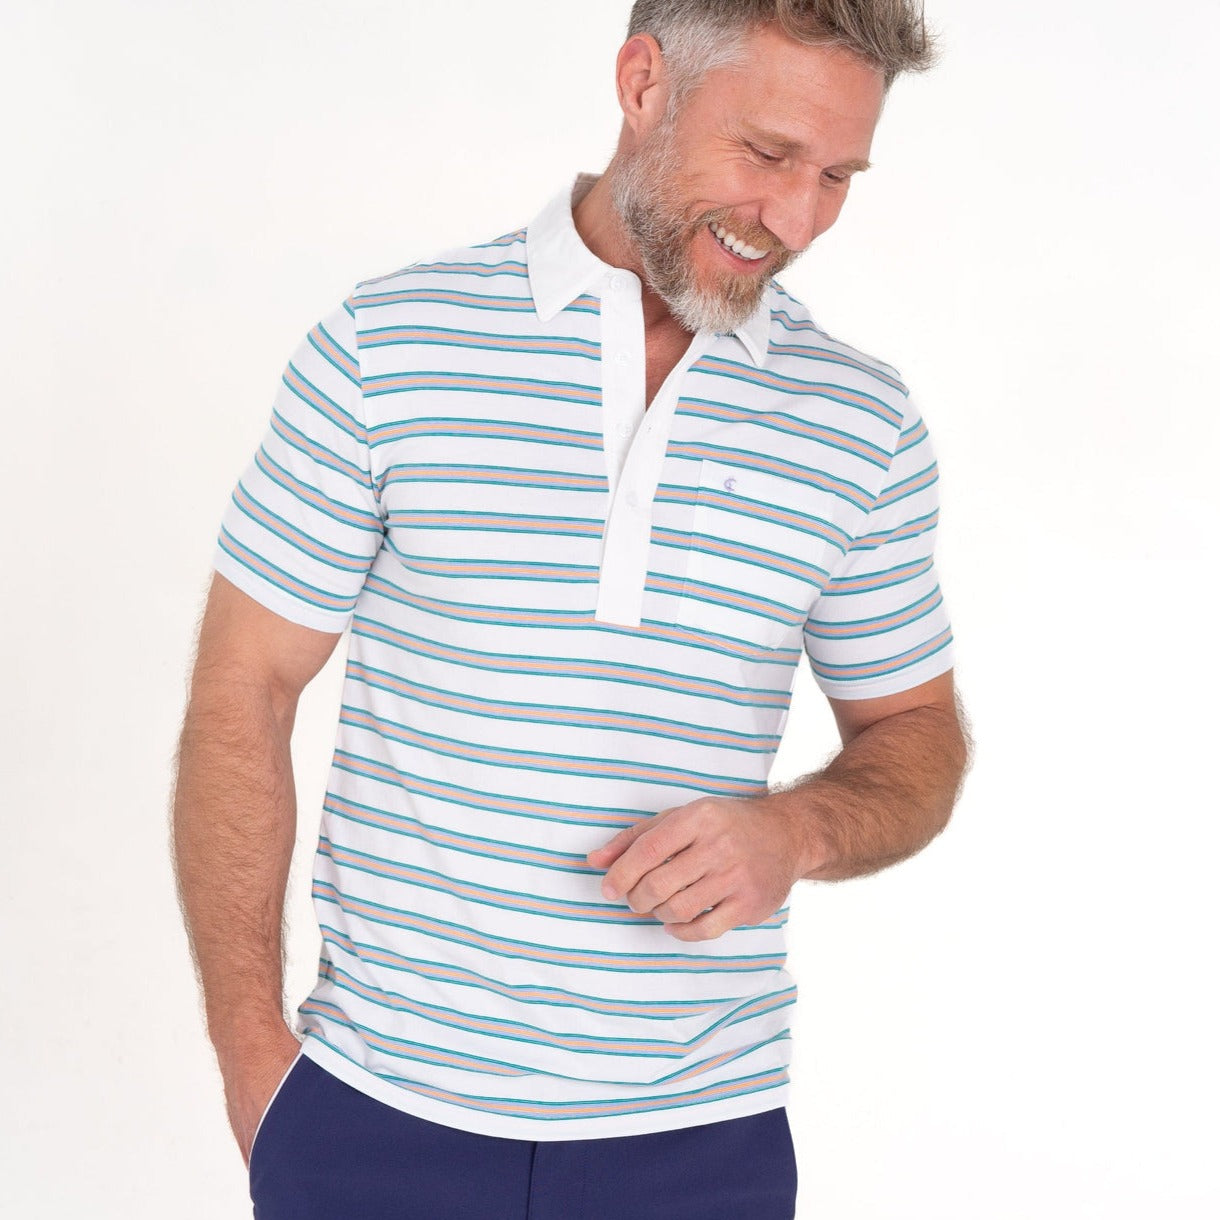 Top-Shelf Players Shirt, Bennett Stripe - White